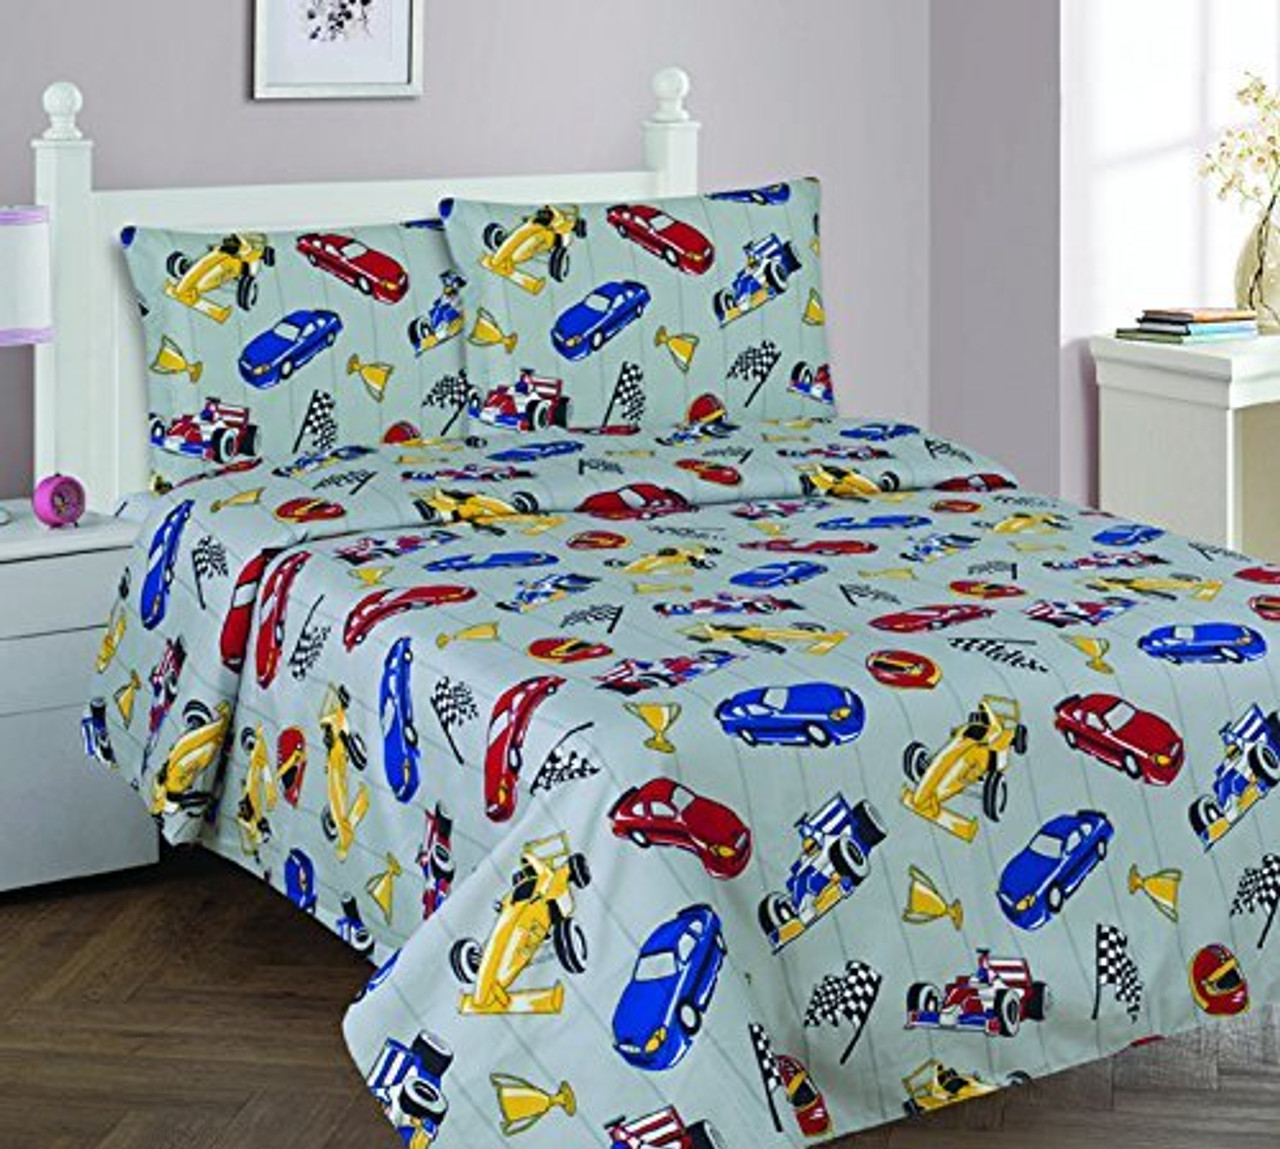 Kids/ Teens Shark Blue Grey Printed Sheet Set With Pillowcase For Boys 